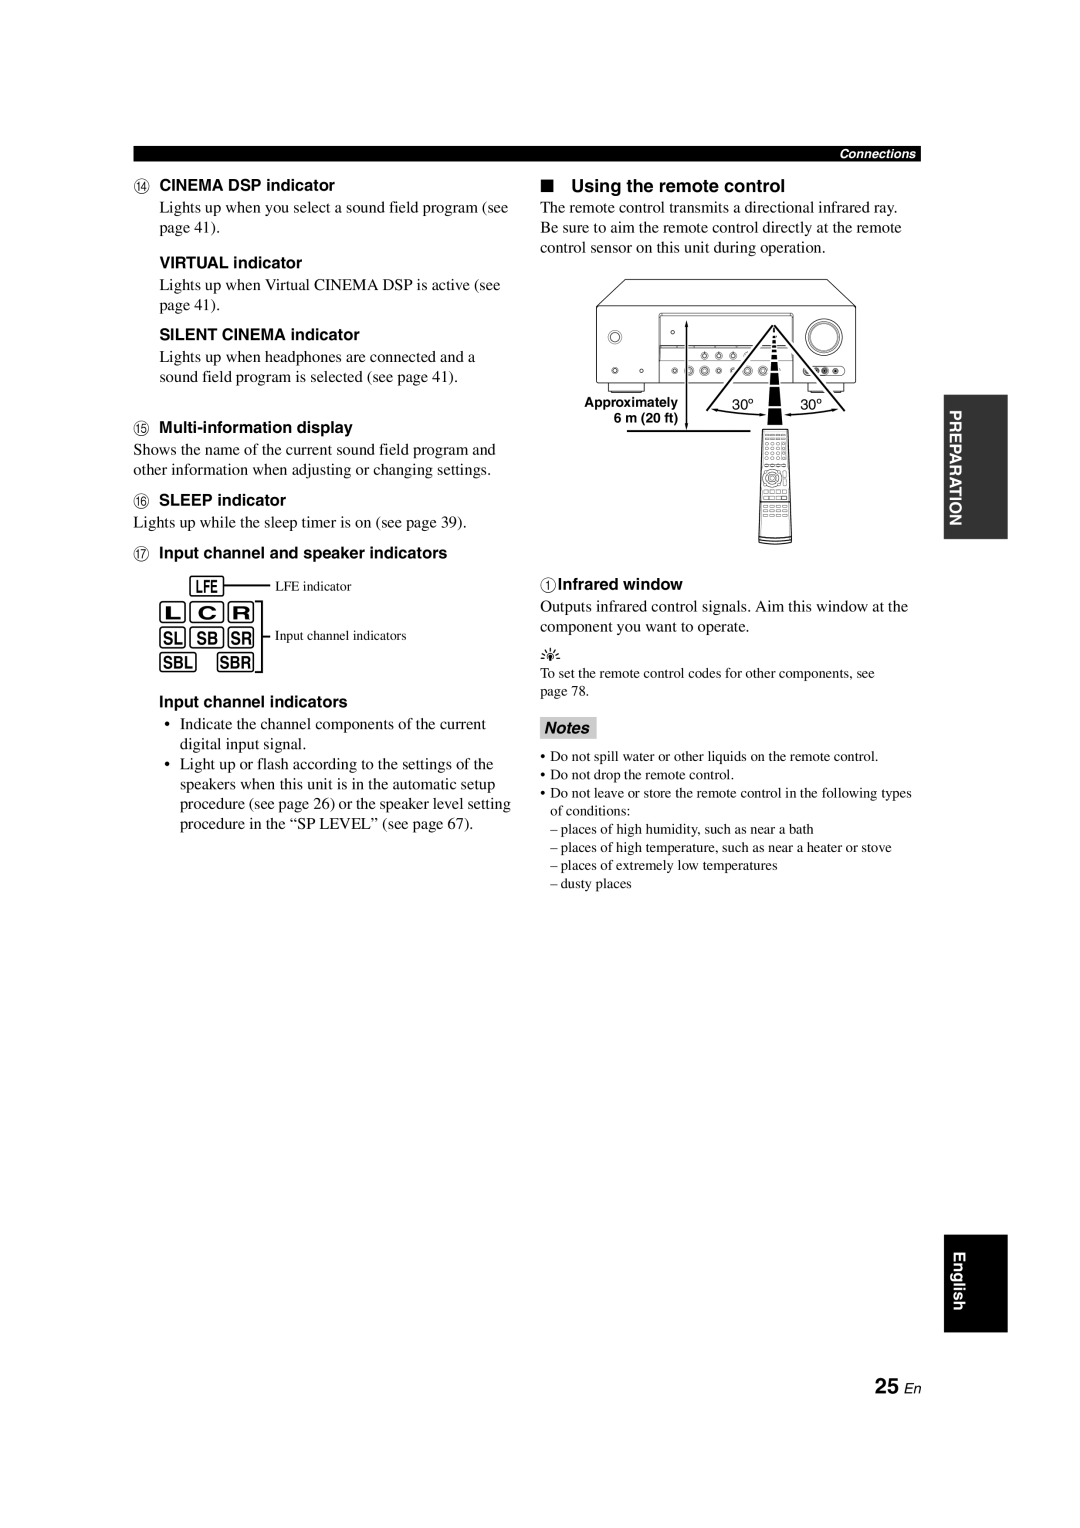 Yamaha RX-V563 owner manual 25 En, L C R, Sbl Sbr, Using the remote control, D CINEMA DSP indicator, VIRTUAL indicator 